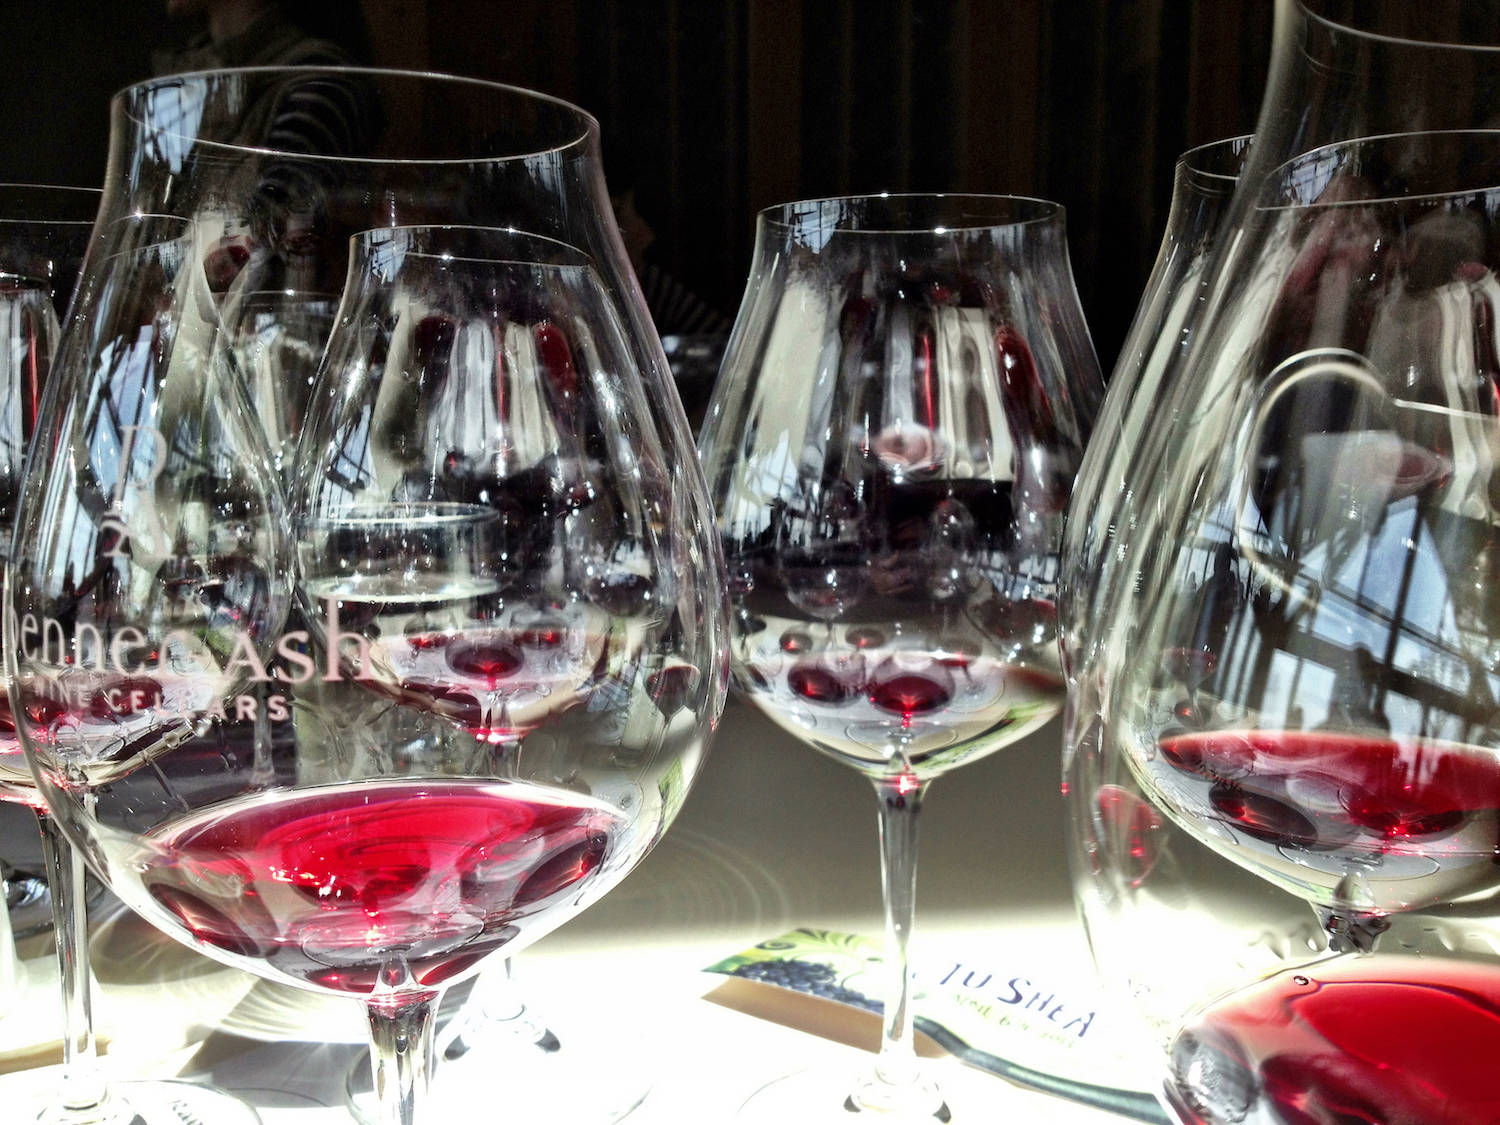 IPNC sets table for celebration of Oregon, Pinot Noir